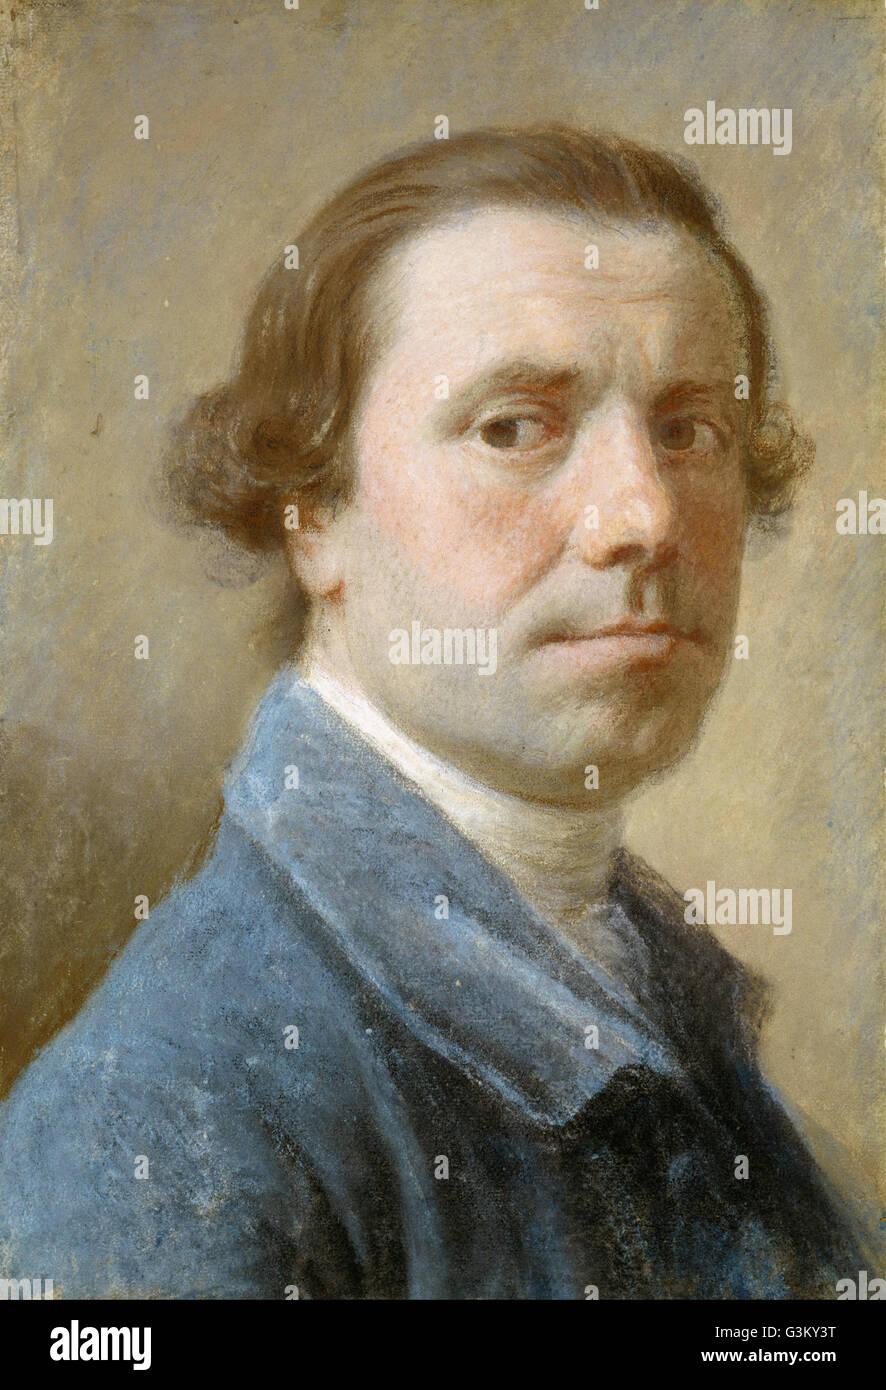 Allan Ramsay - Allan Ramsay, 1713 - 1784. Artist (Self-portrait) Stock Photo